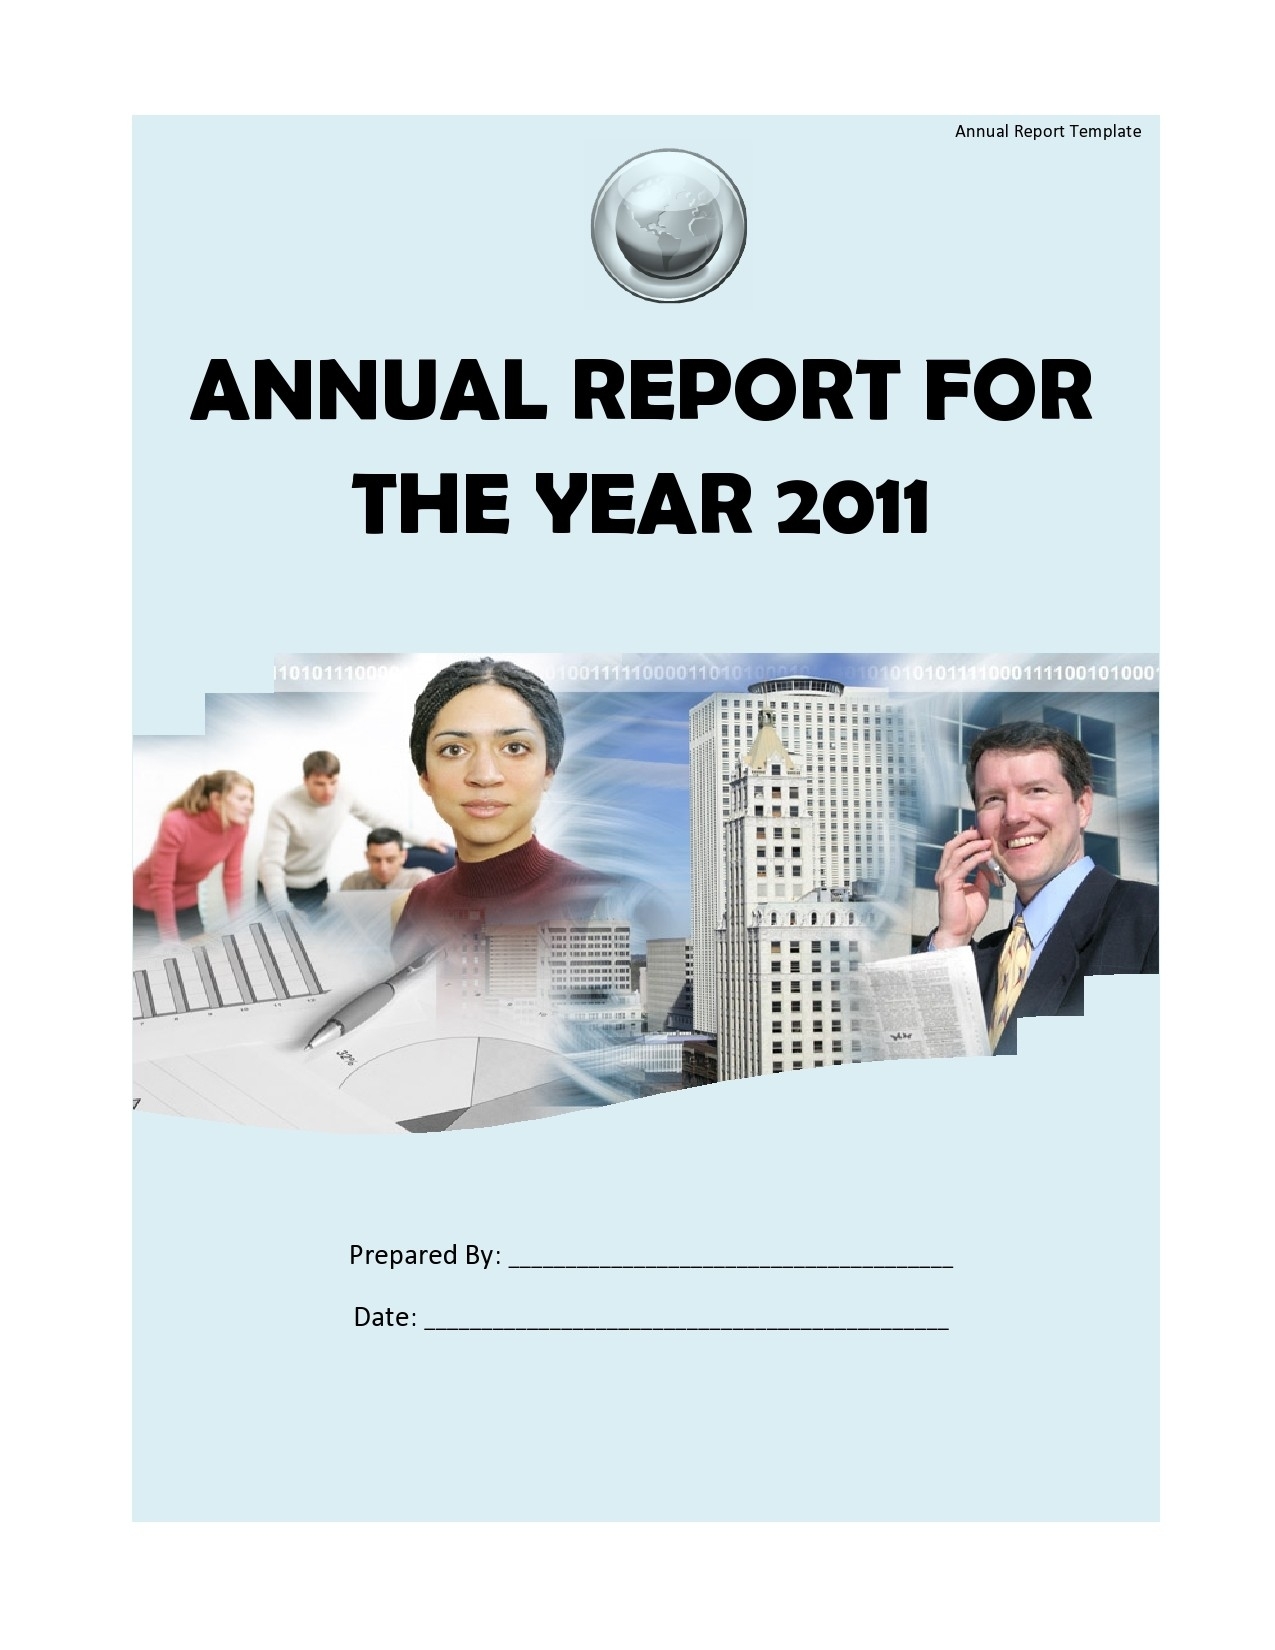 49 Free Annual Report Templates [Llc, Nonprofit..] ᐅ Templatelab Inside Non Profit Annual Report Template